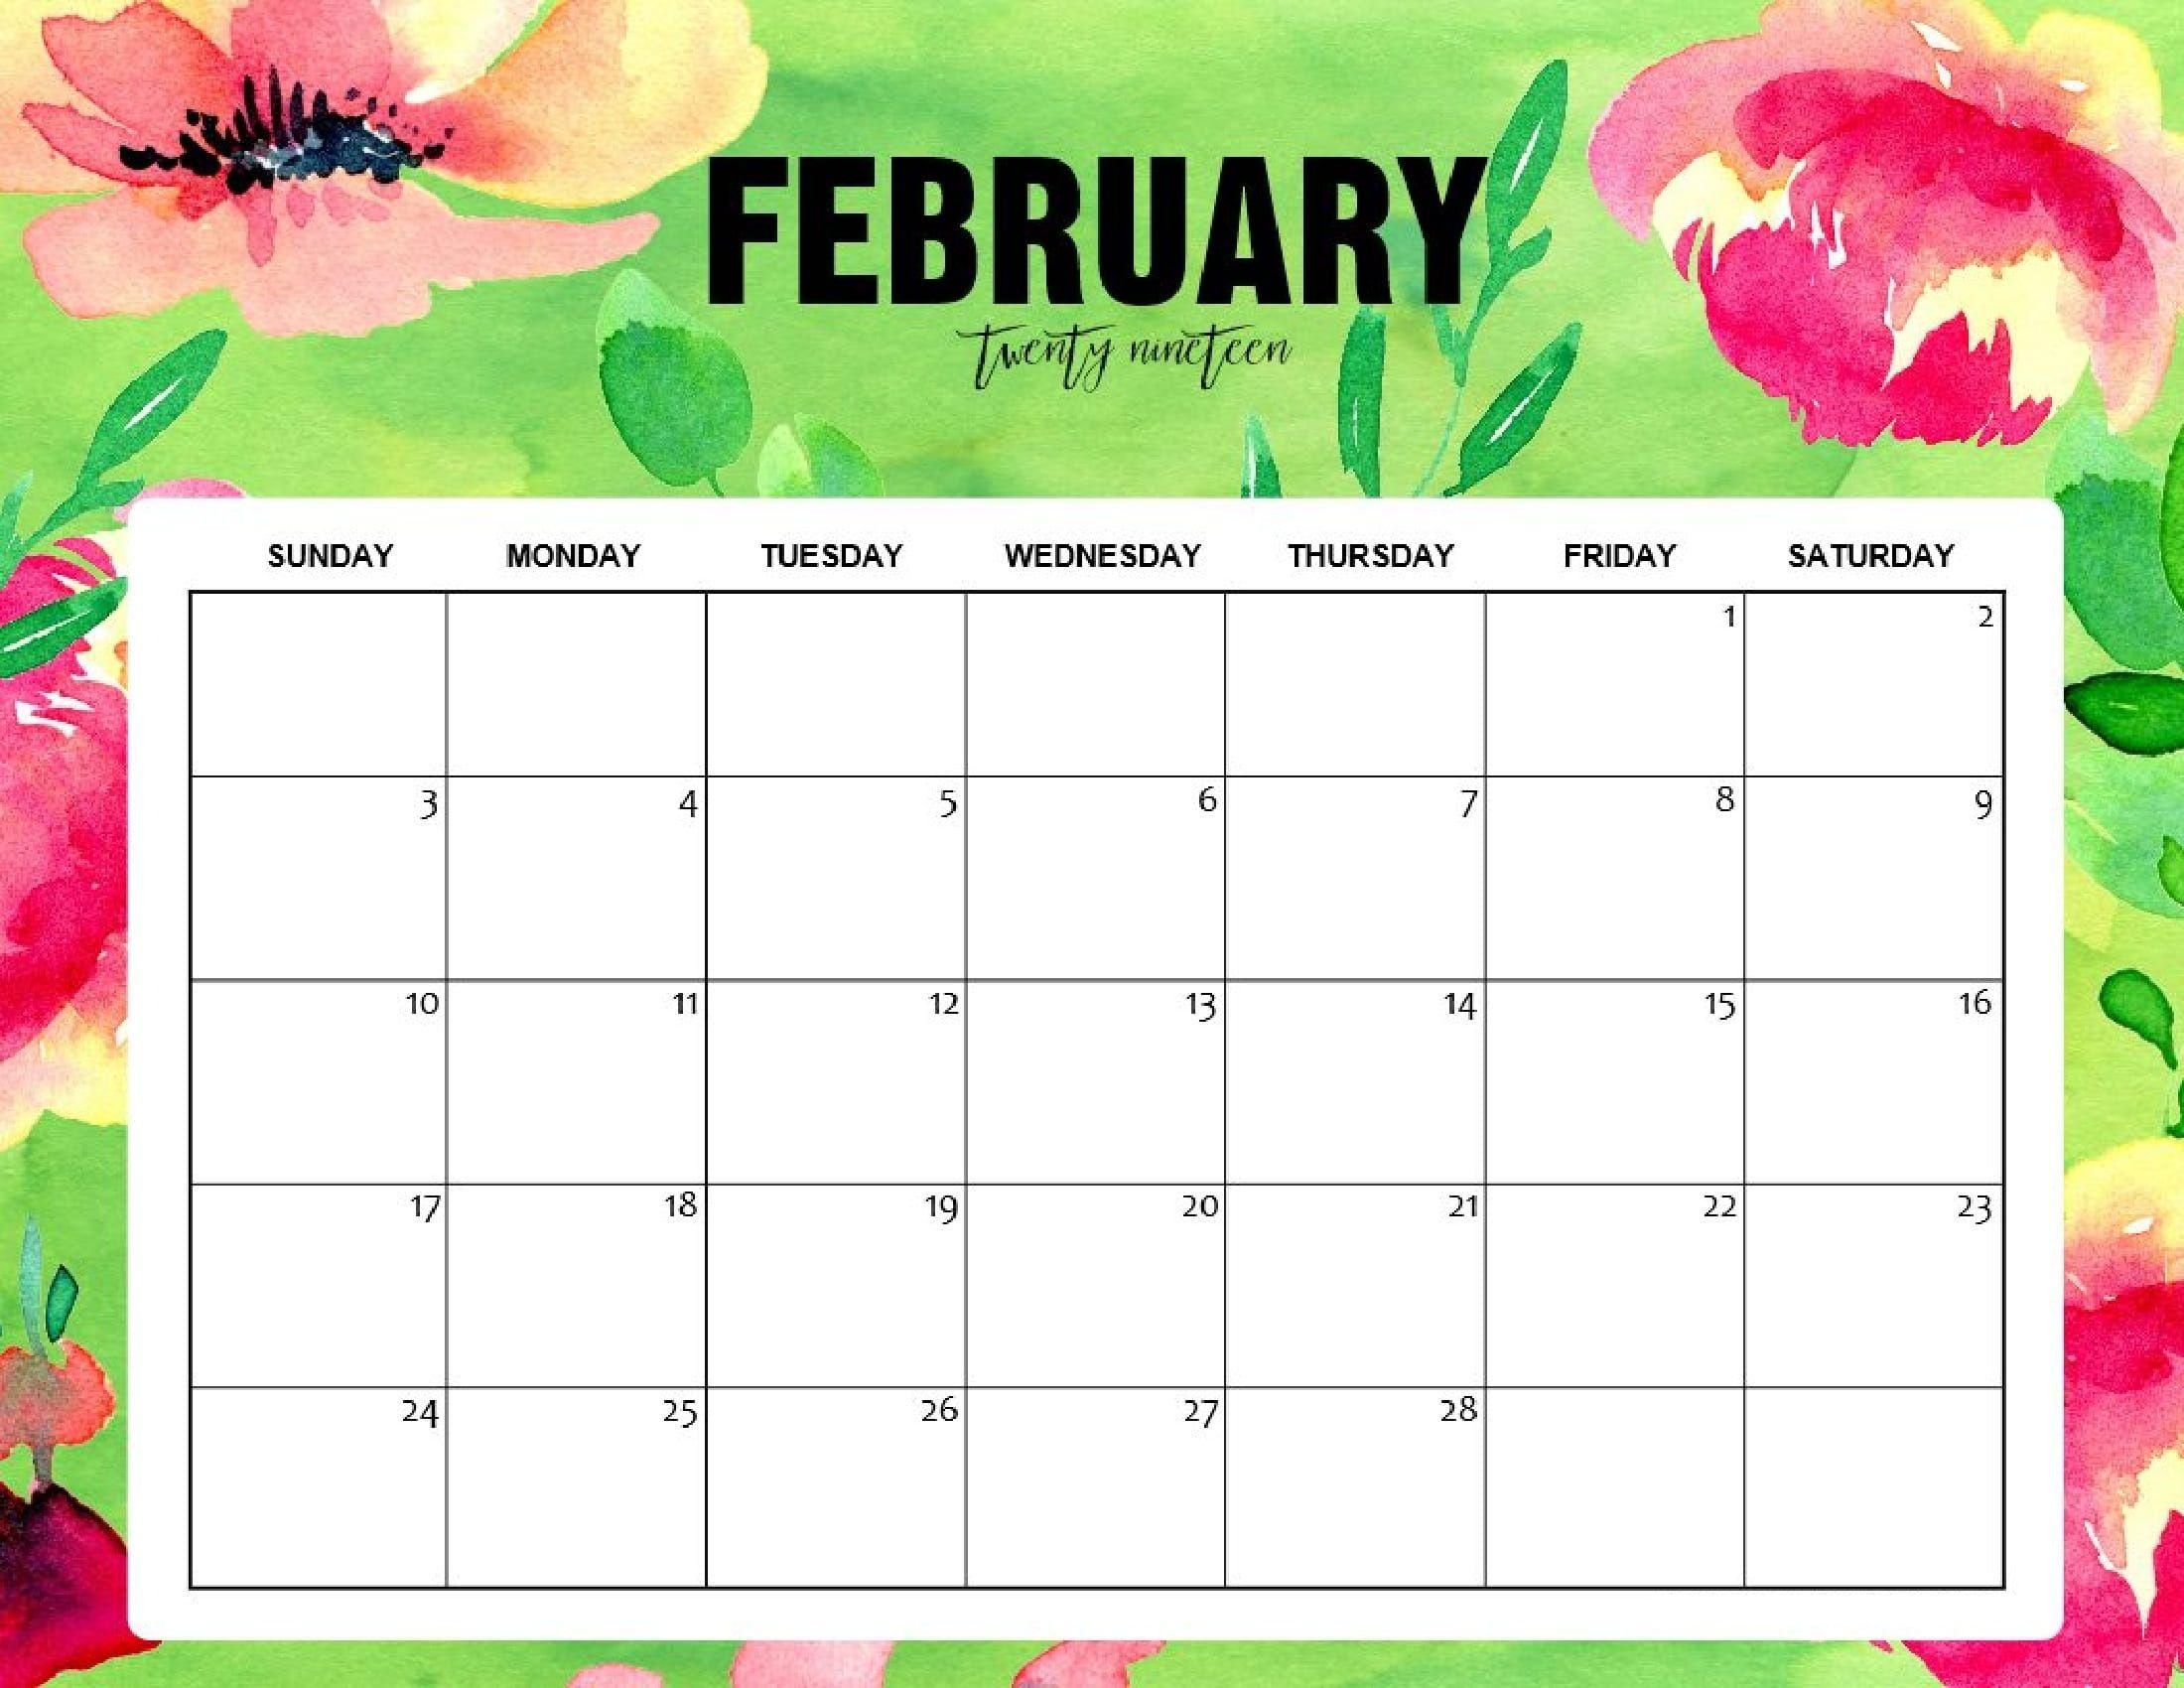 February 2019 Calendar Wallpapers Wallpaper Cave